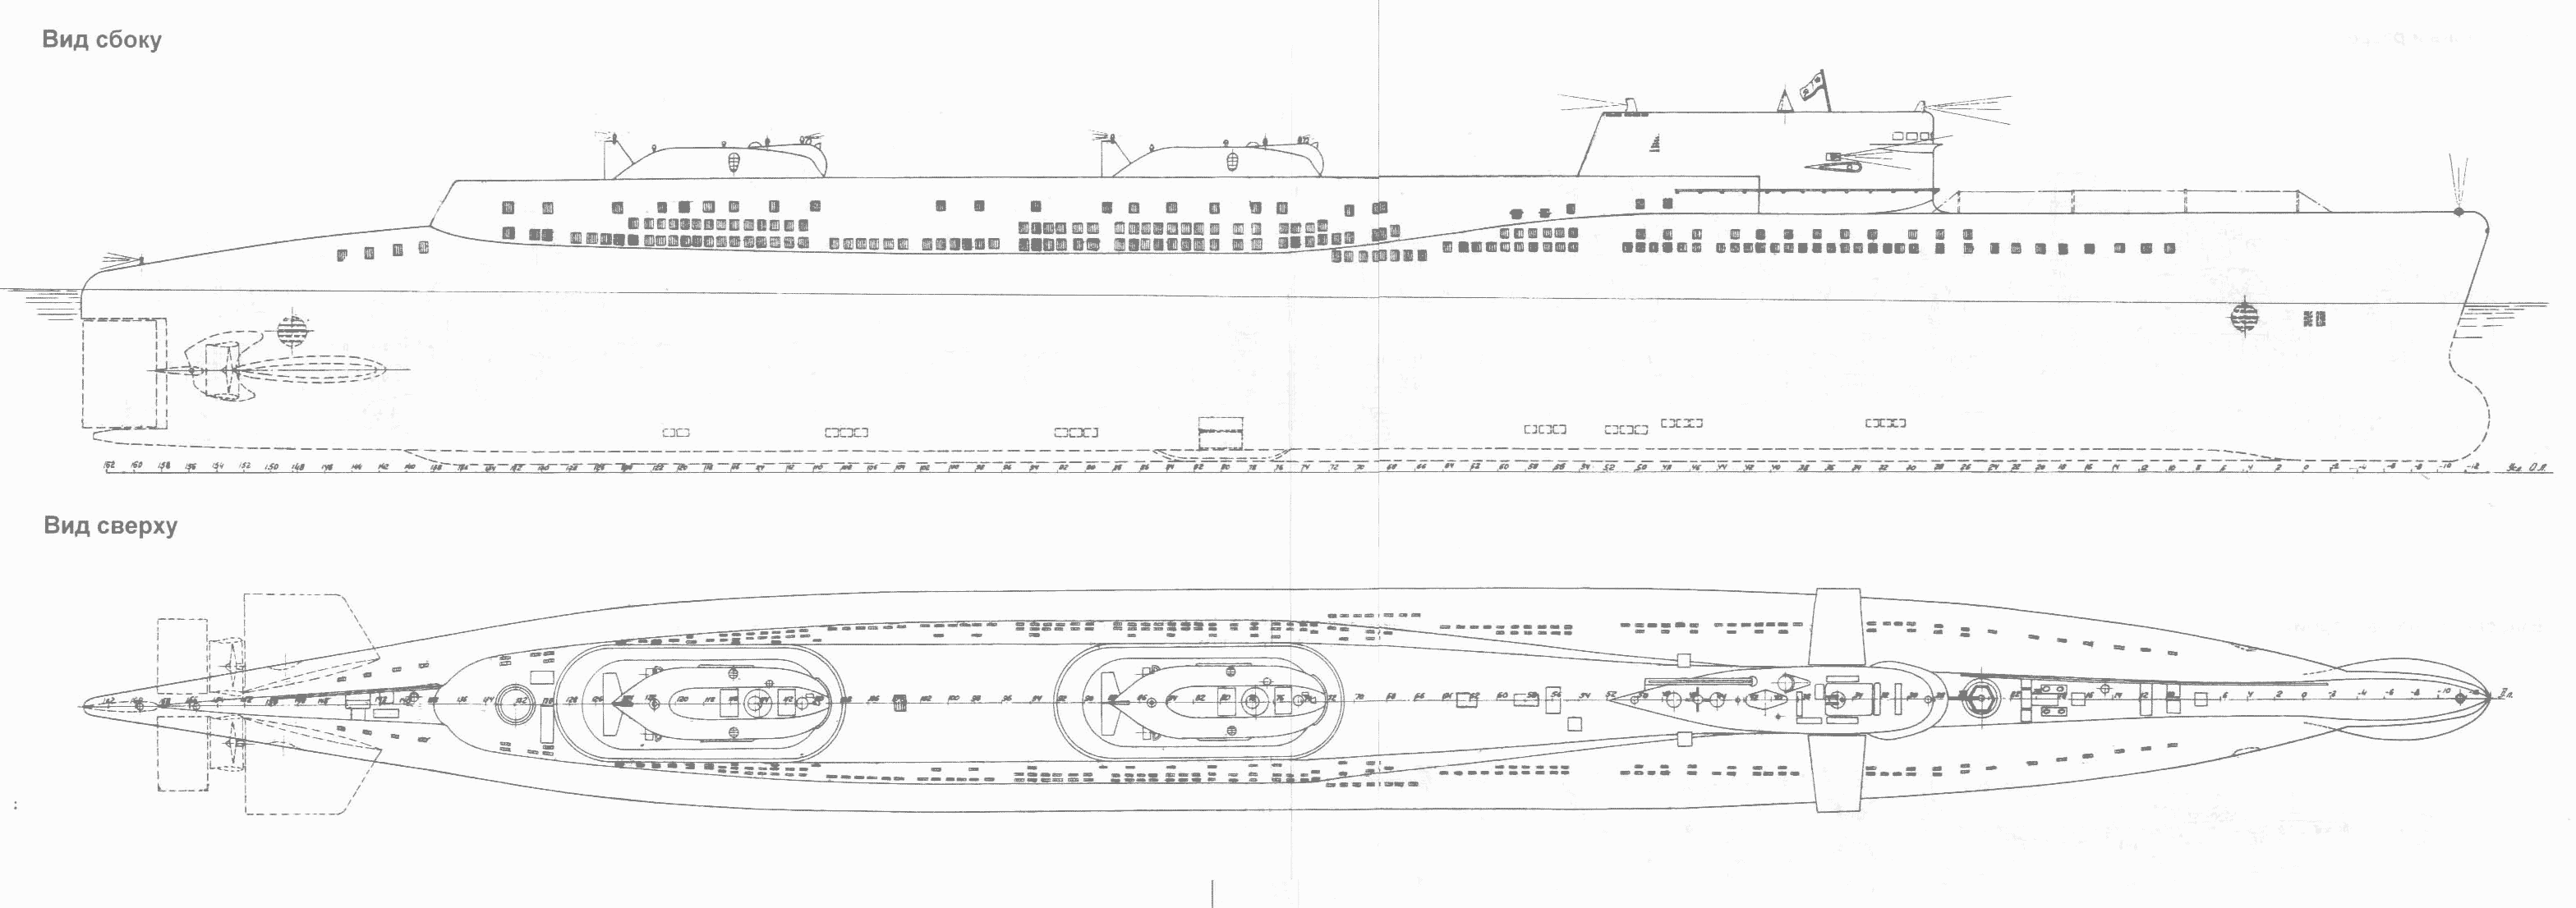 India-class submarine blueprint